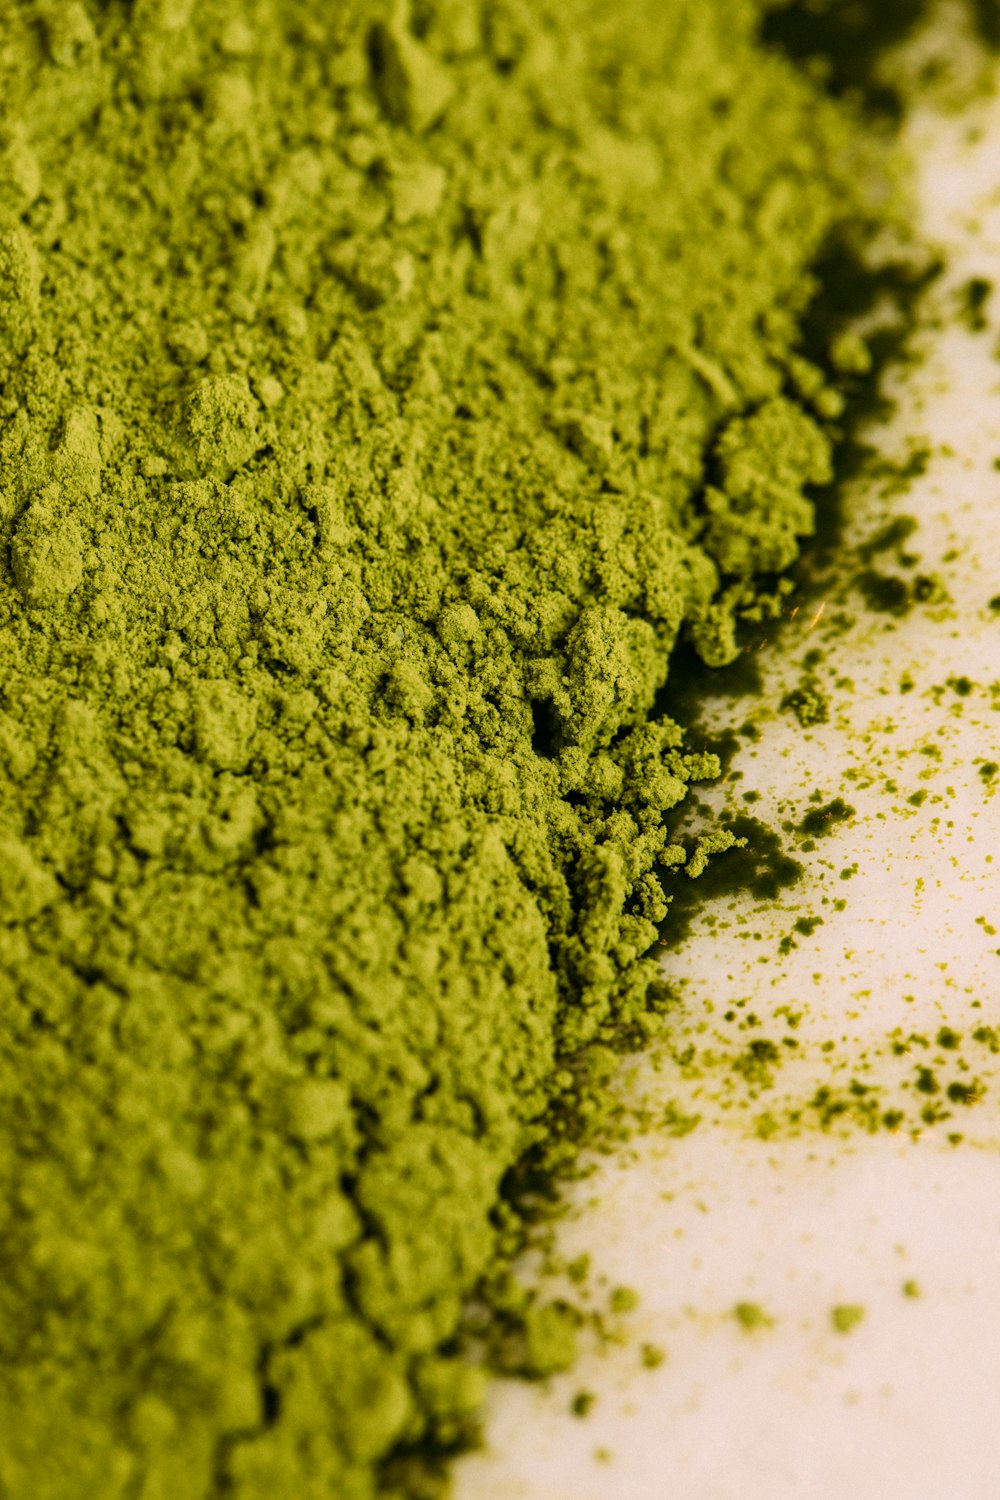 green powder on white surface